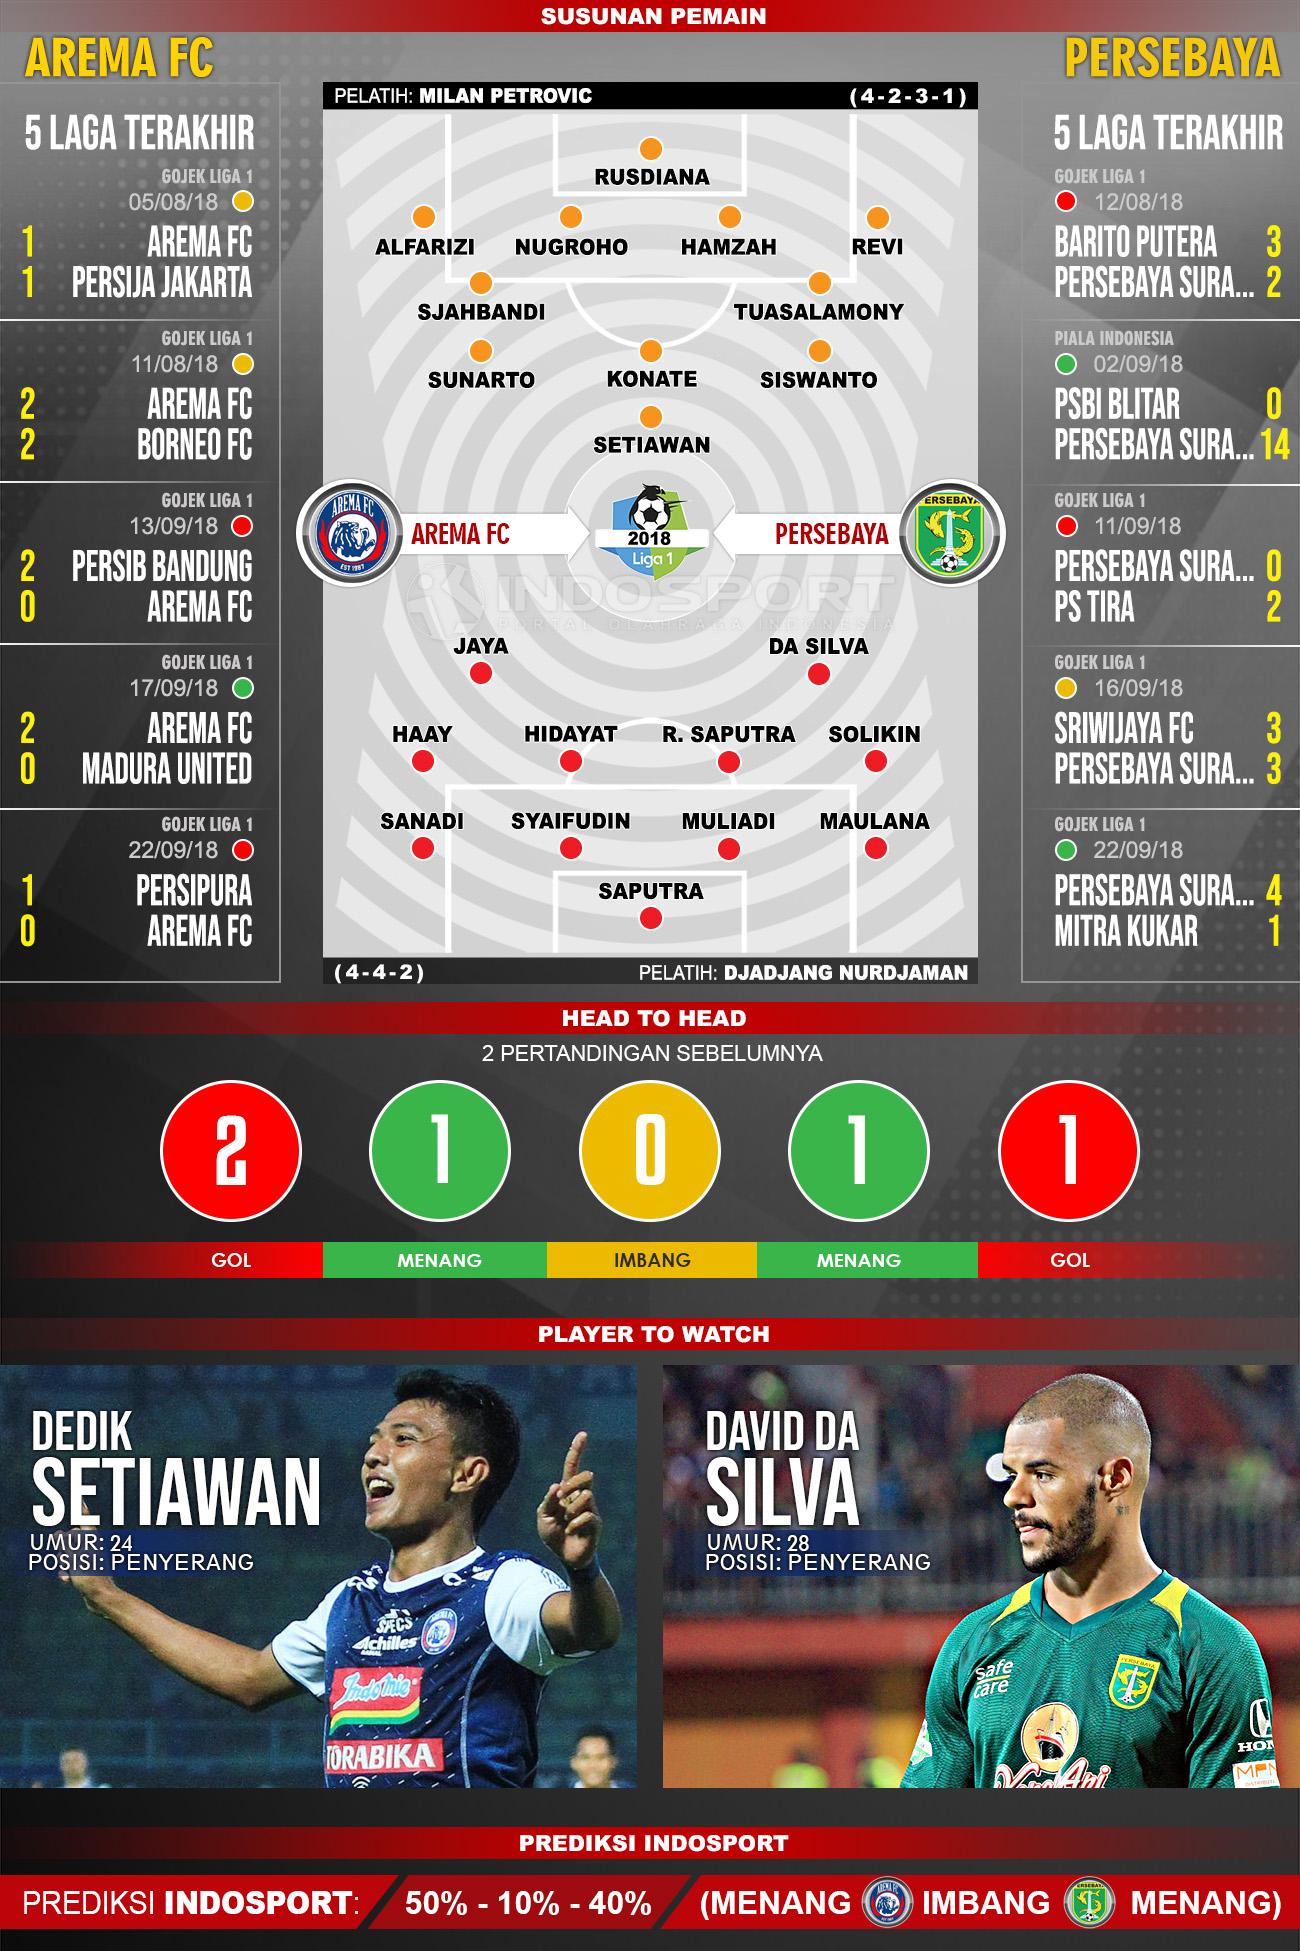 Arema FC vs Persebaya (Susunan Pemain - Lima Laga Terakhir - Player to Watch - Prediksi Indosport) Copyright: Indosport.com